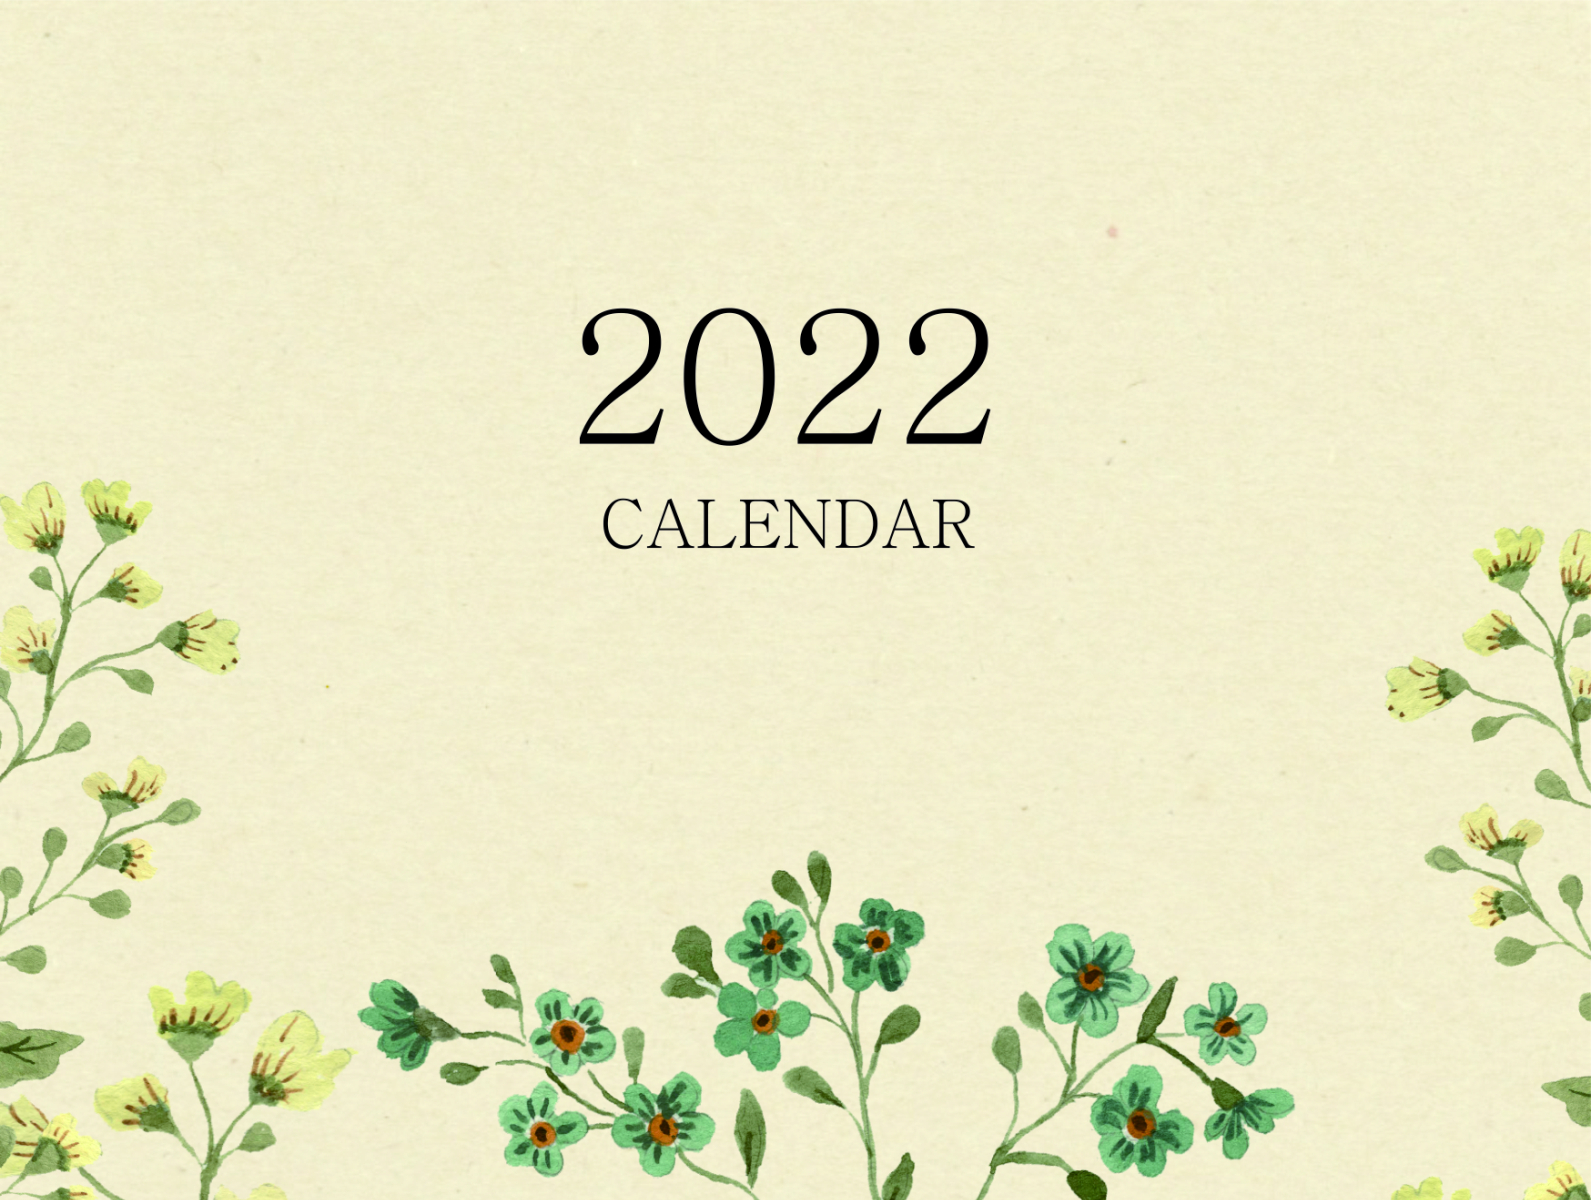 Printable 2022 Calendar by Ari Nur Chintia on Dribbble